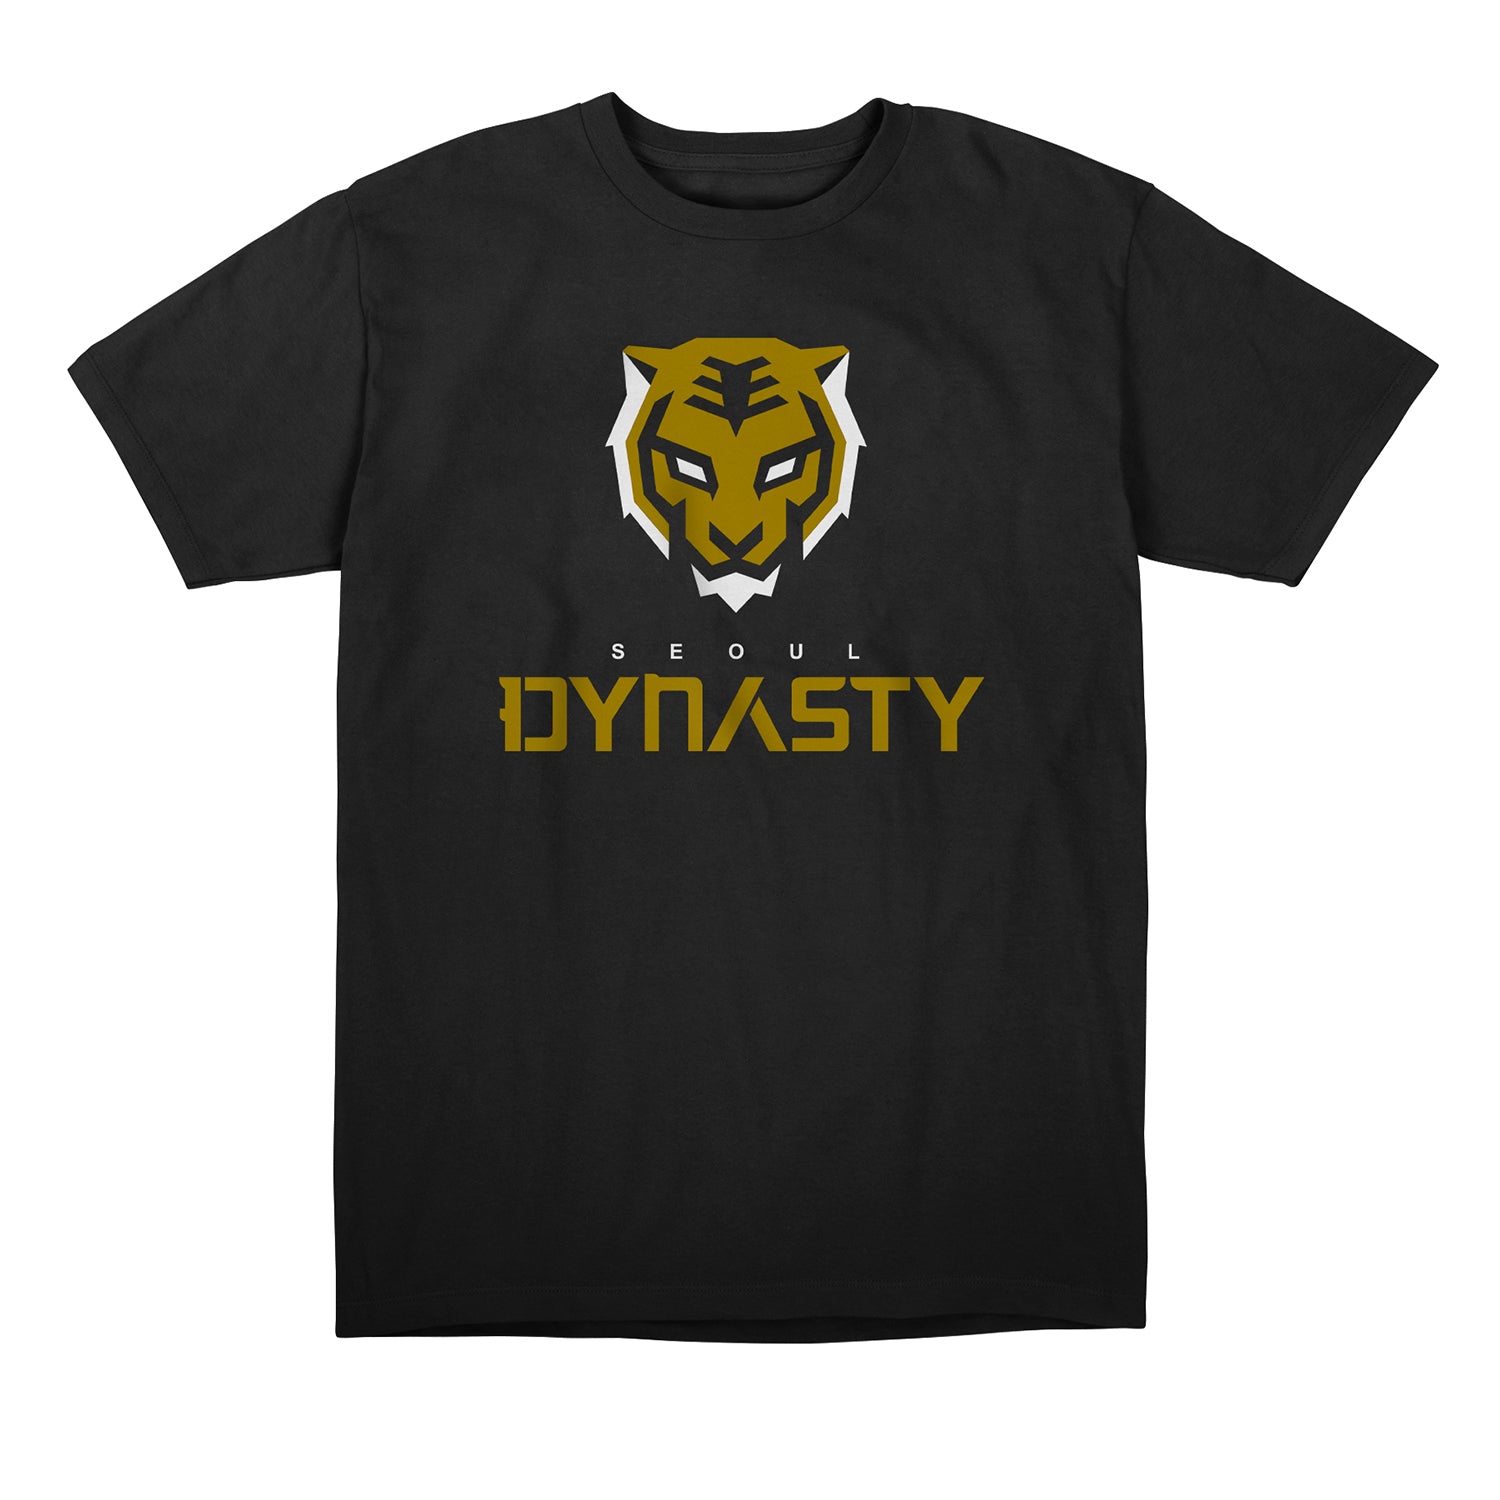 Seoul Dynasty Black Team Identity T-Shirt - Front View